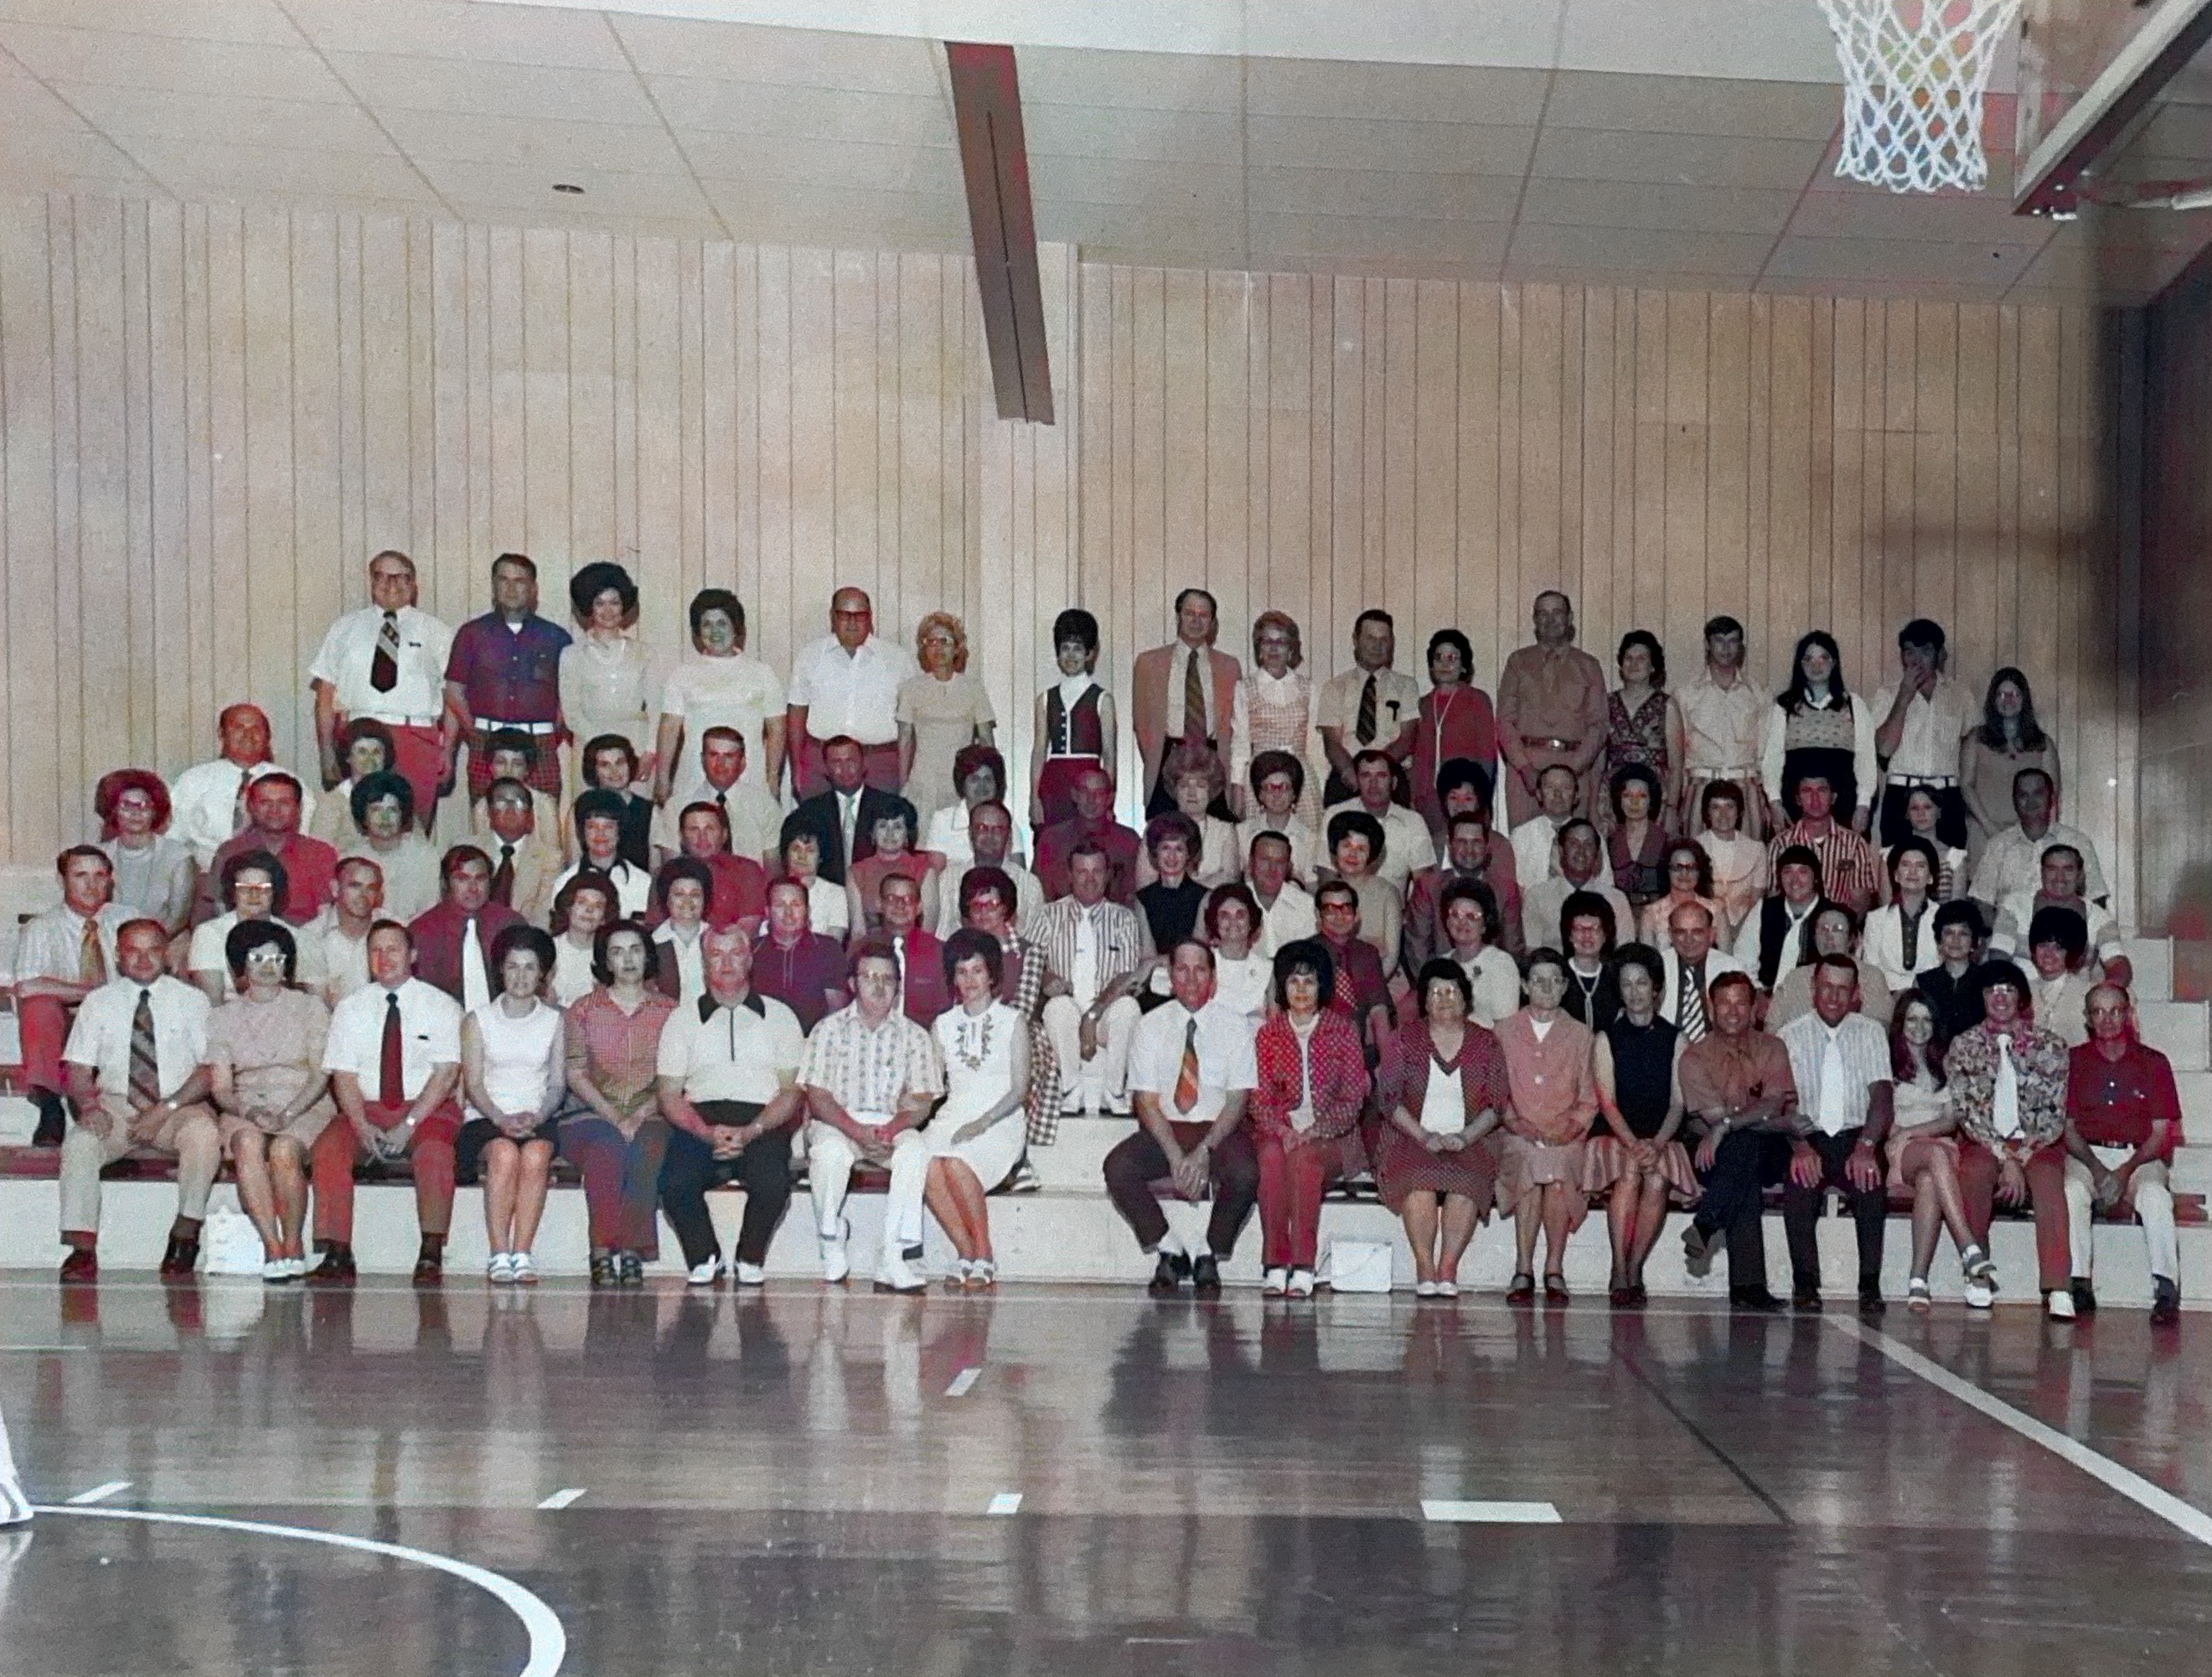 McLish high school reunion 1972